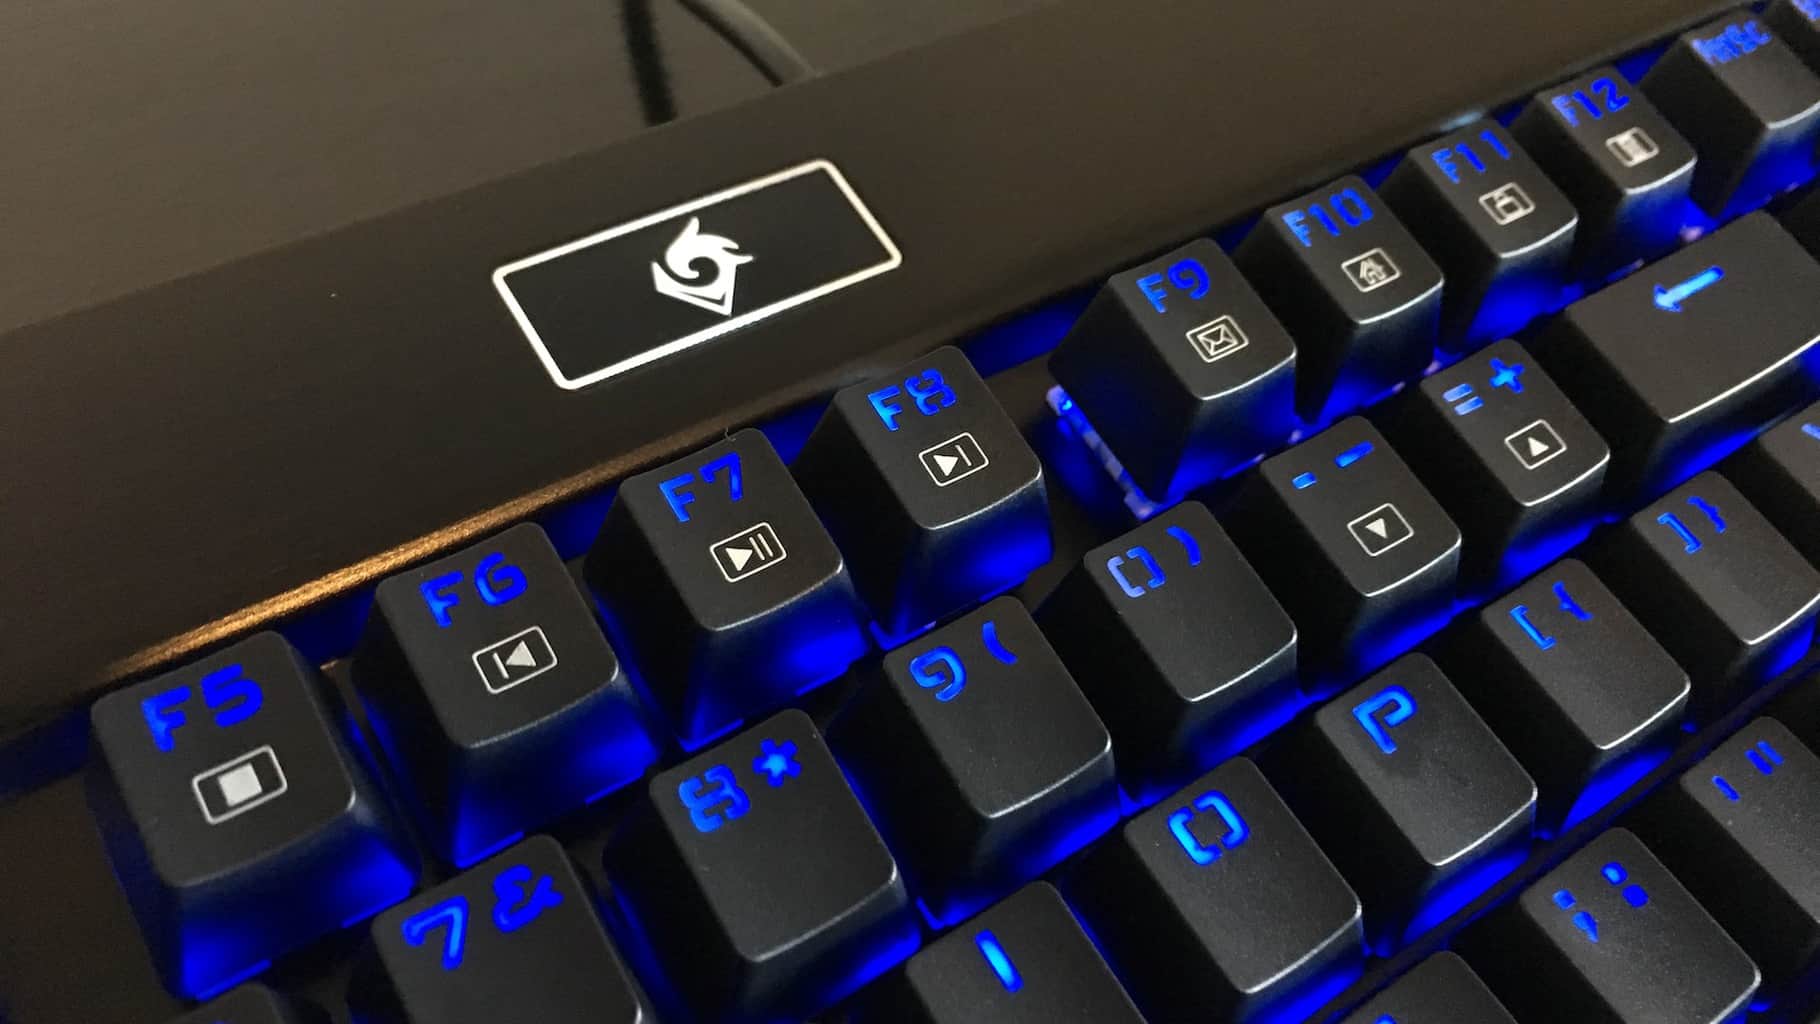 Eagletec – KG010 Wired Gaming Keyboard: How To Adjust Backlight